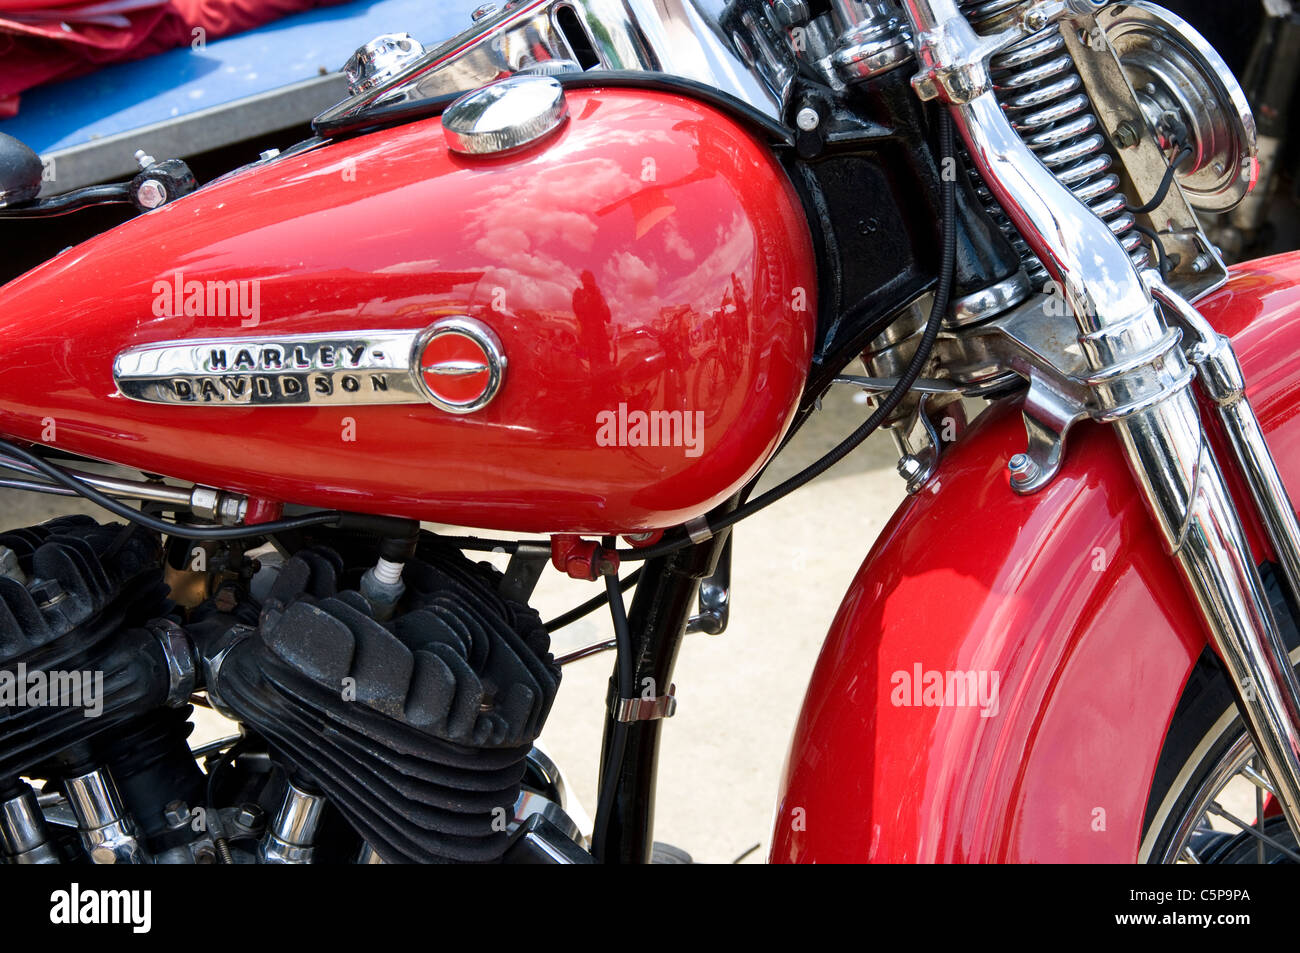 Klassische Harley Davidson Motorrad. Stockfoto